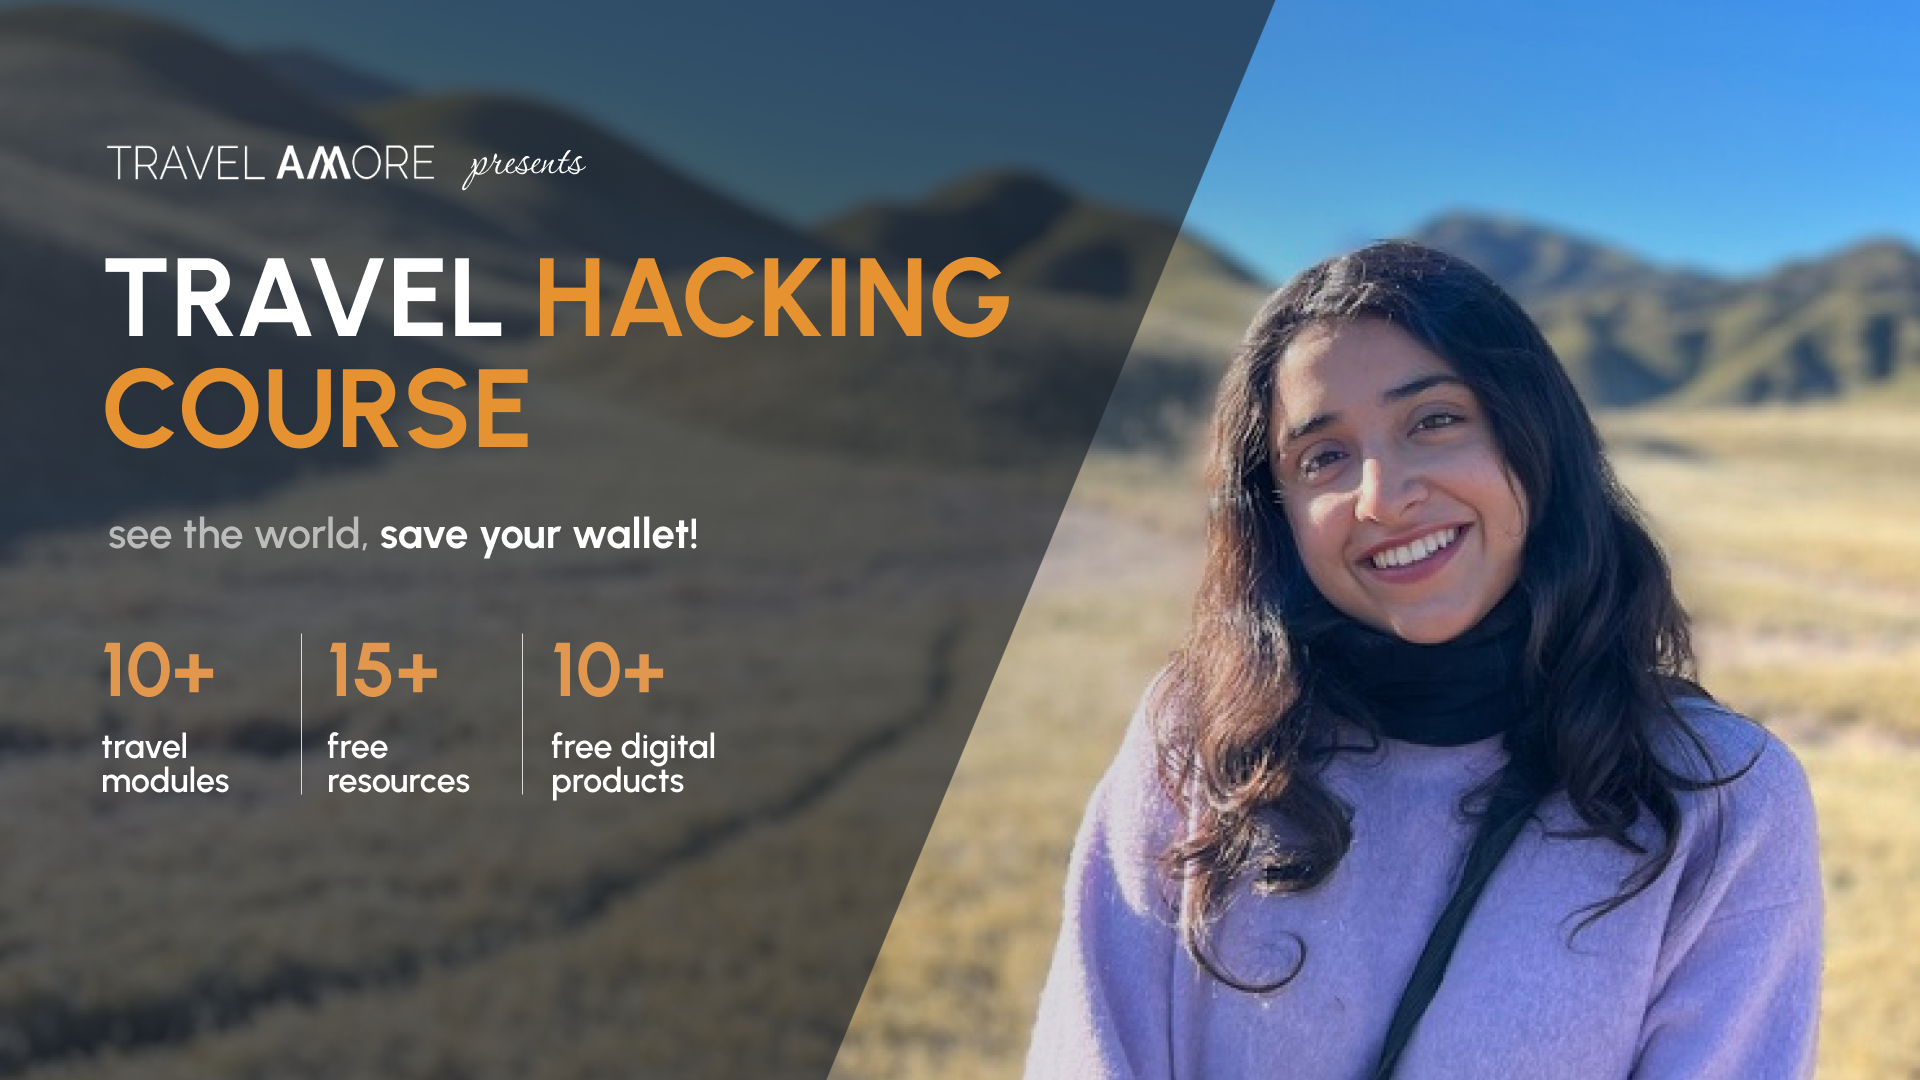 The Travel Hacking Course by Aakanksha Monga 🌎